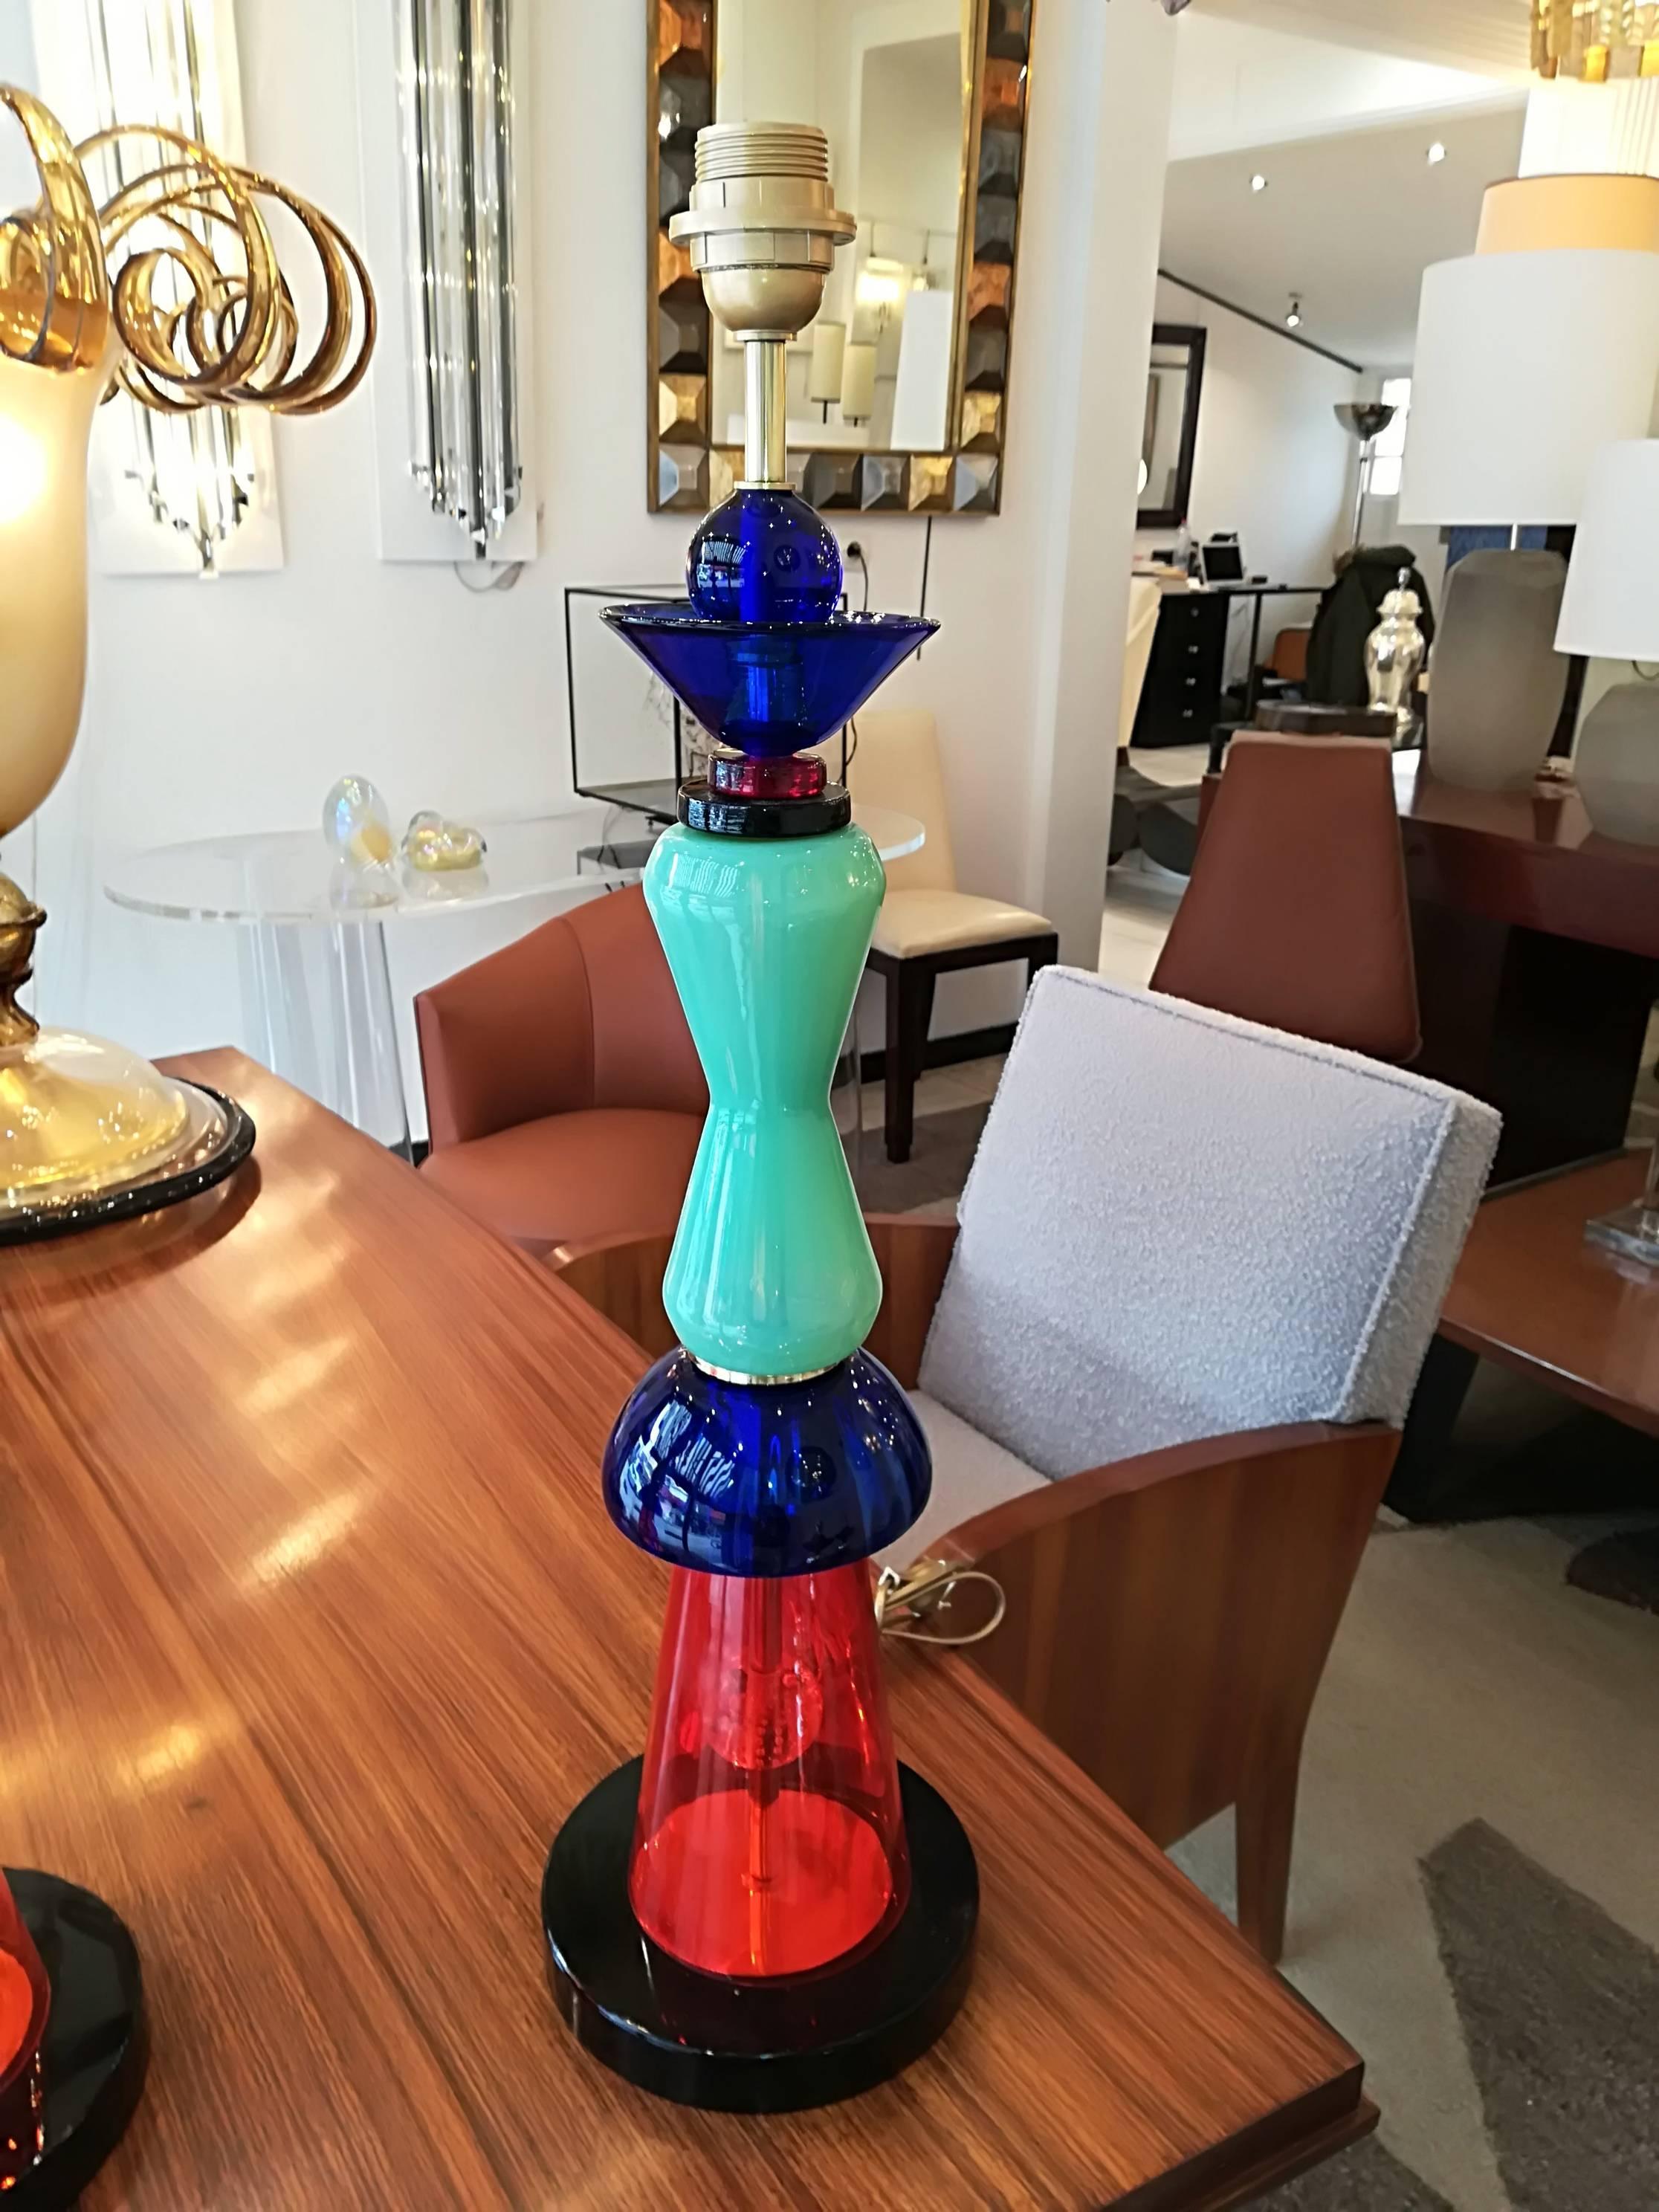 20th Century Pair of Italian Table Lamps in Handblown Murano Glass